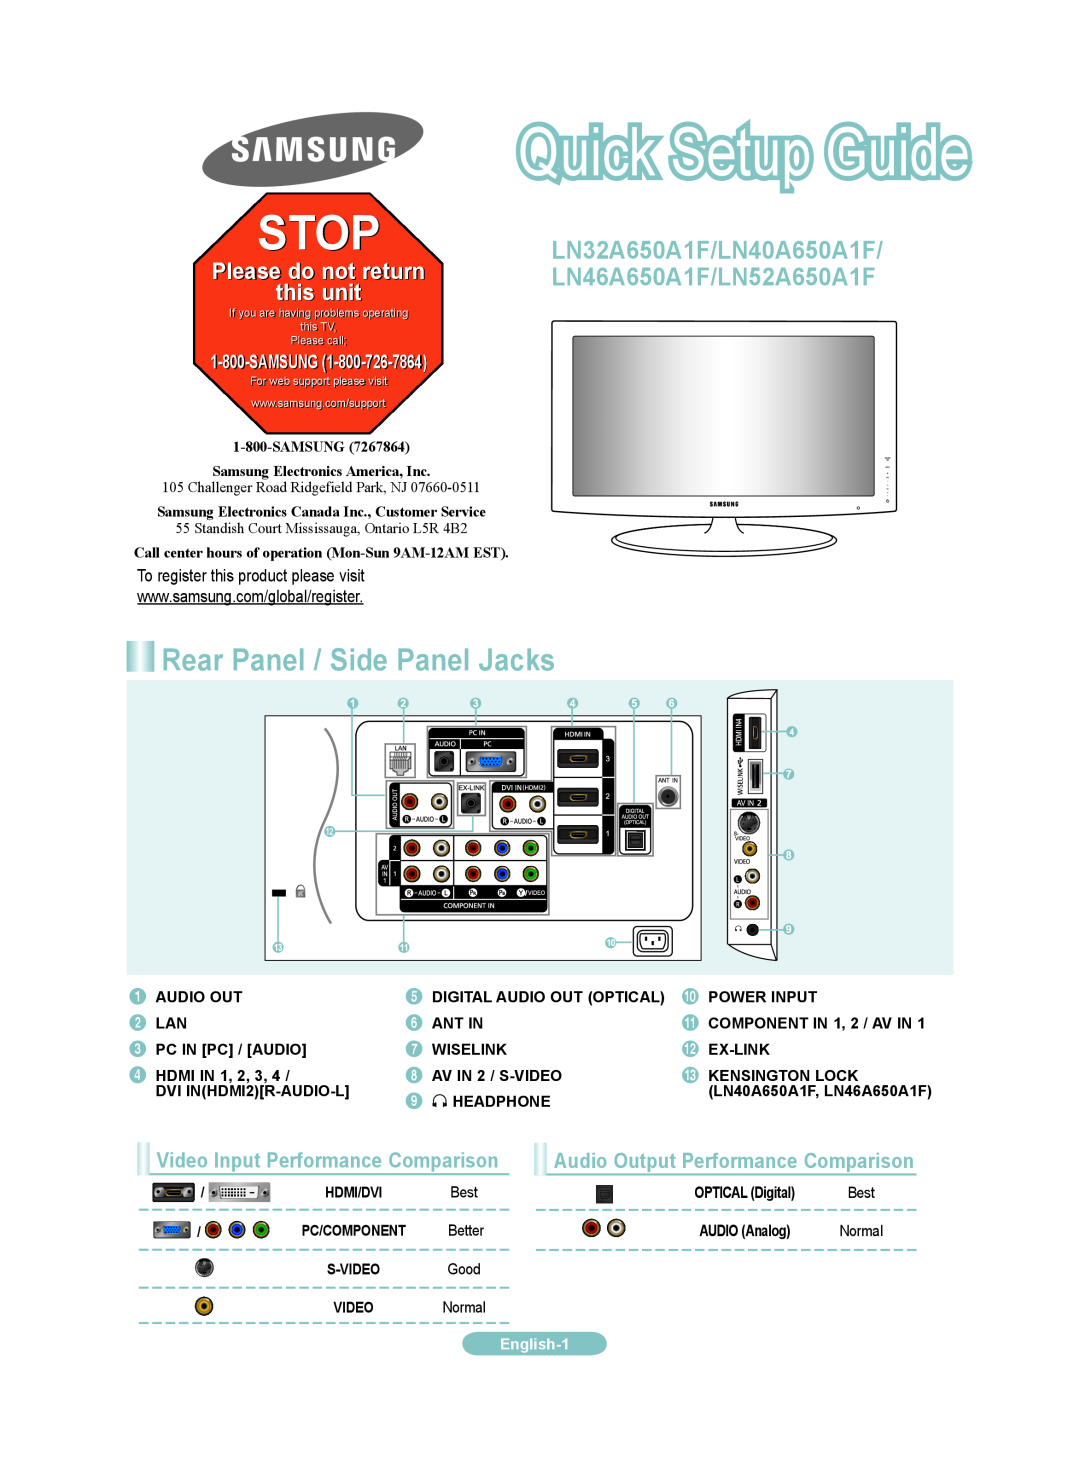 Samsung LN40A650A1F setup guide Stop, Rear Panel / Side Panel Jacks, LNA0A1F/LN0A0A1F LNA0A1F/LNA0A1F 